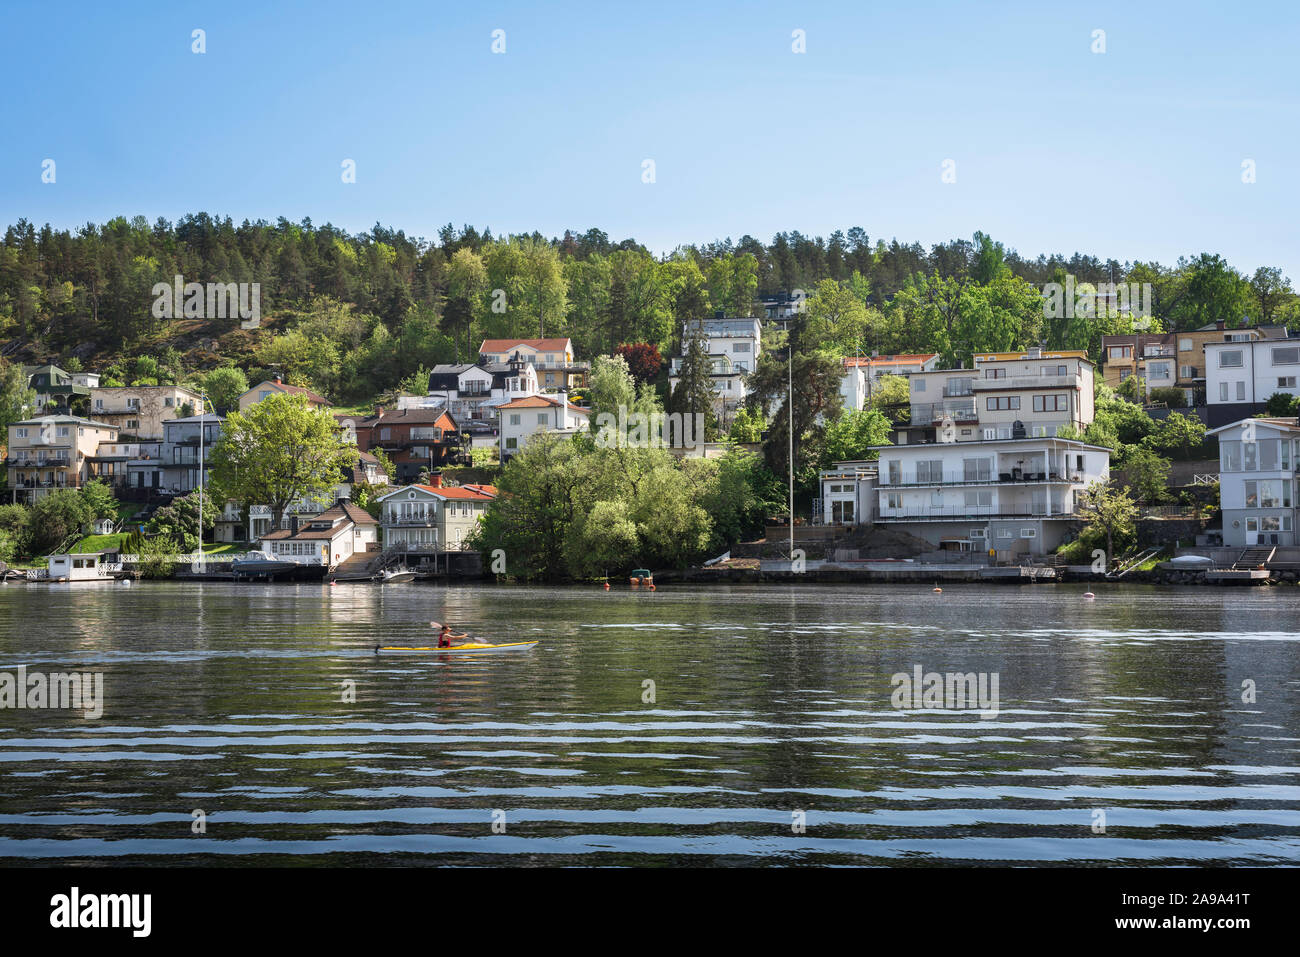 Stockholm waterfront, view of waterside buildings on Ekensbergs, a residential area alongside Lake Malaren in east Stockholm, Sweden. Stock Photo